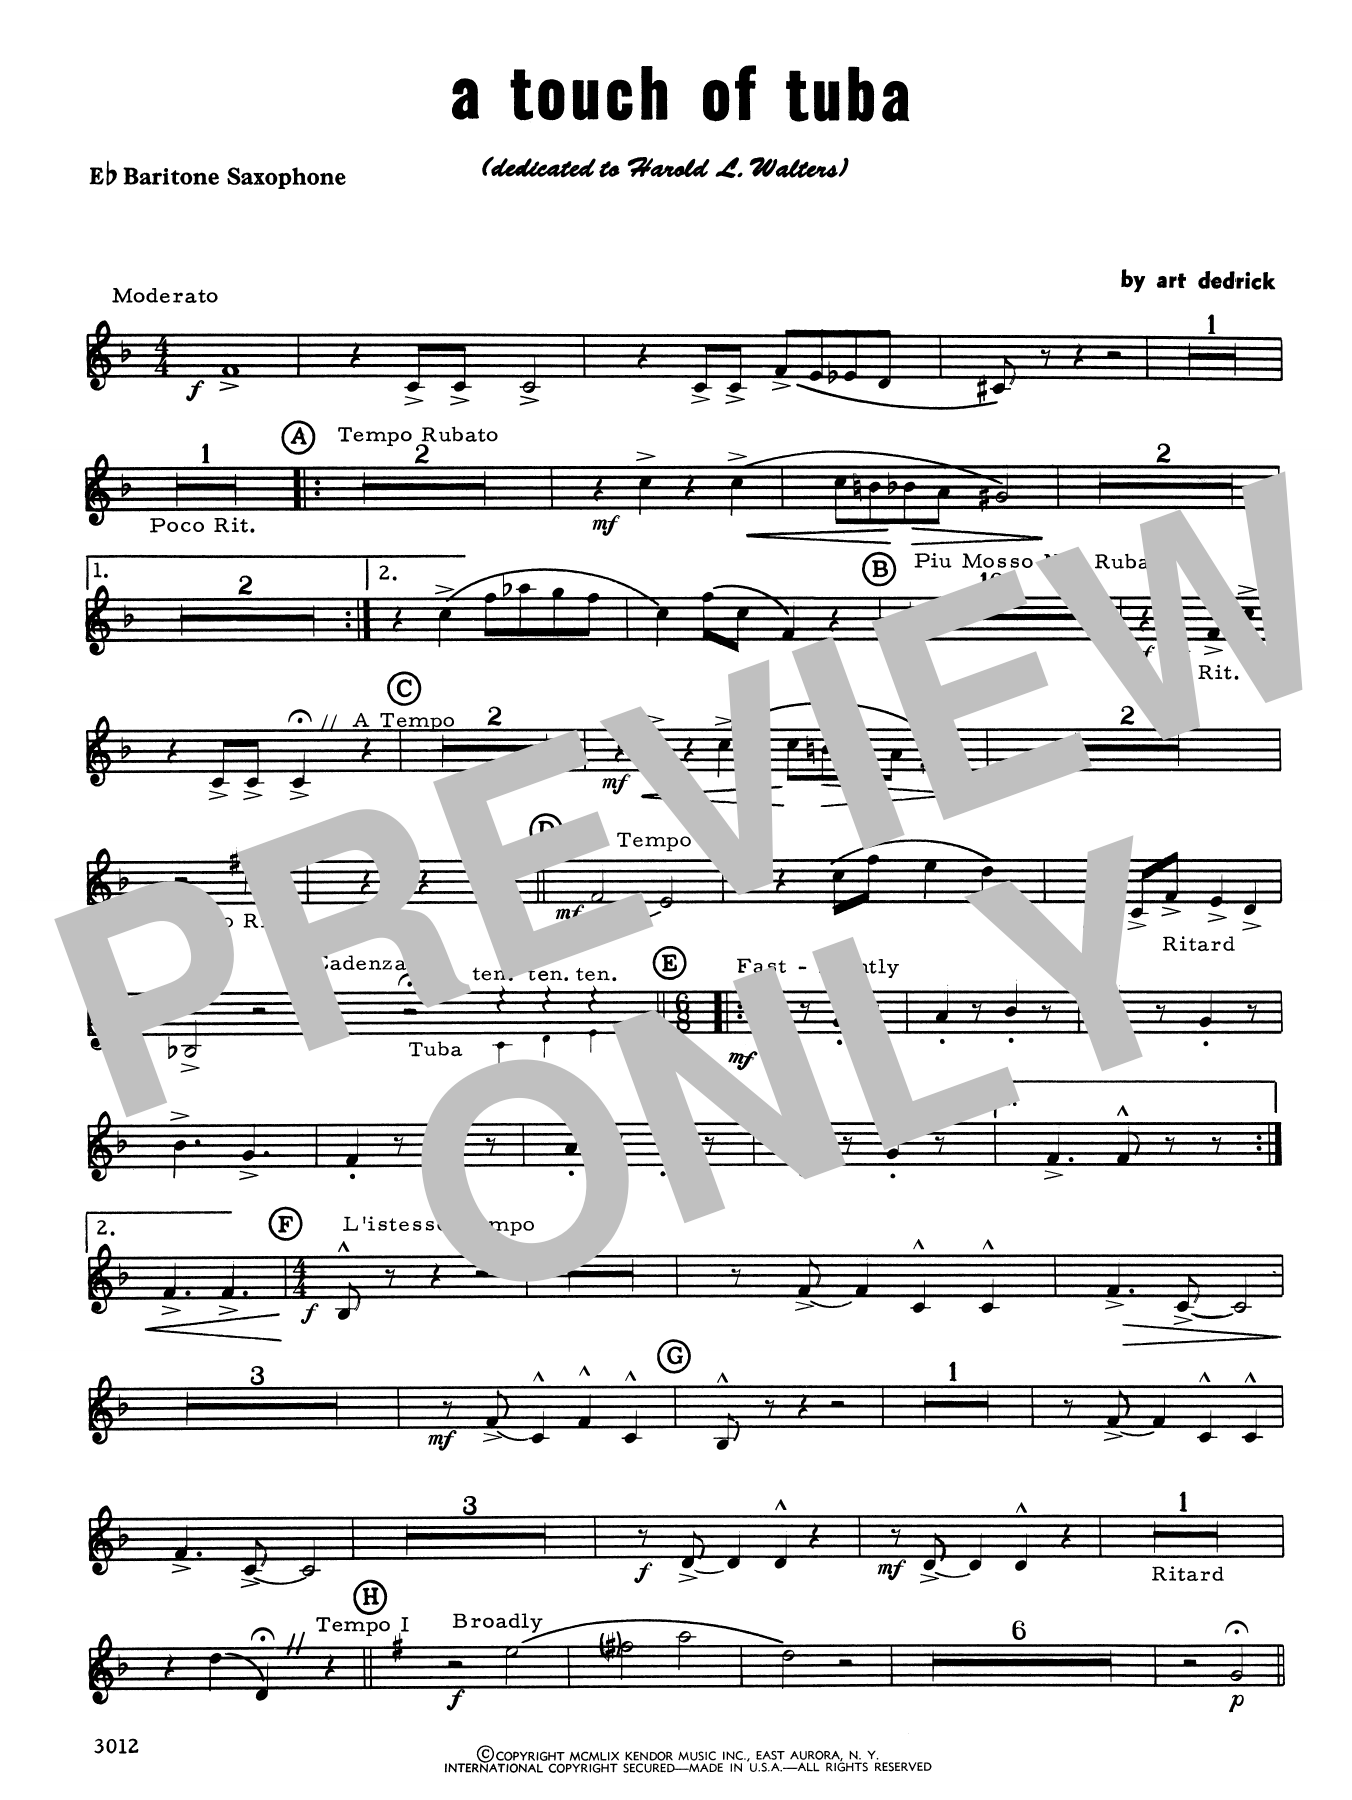 Download Art Dedrick A Touch Of Tuba - Eb Baritone Saxophone Sheet Music